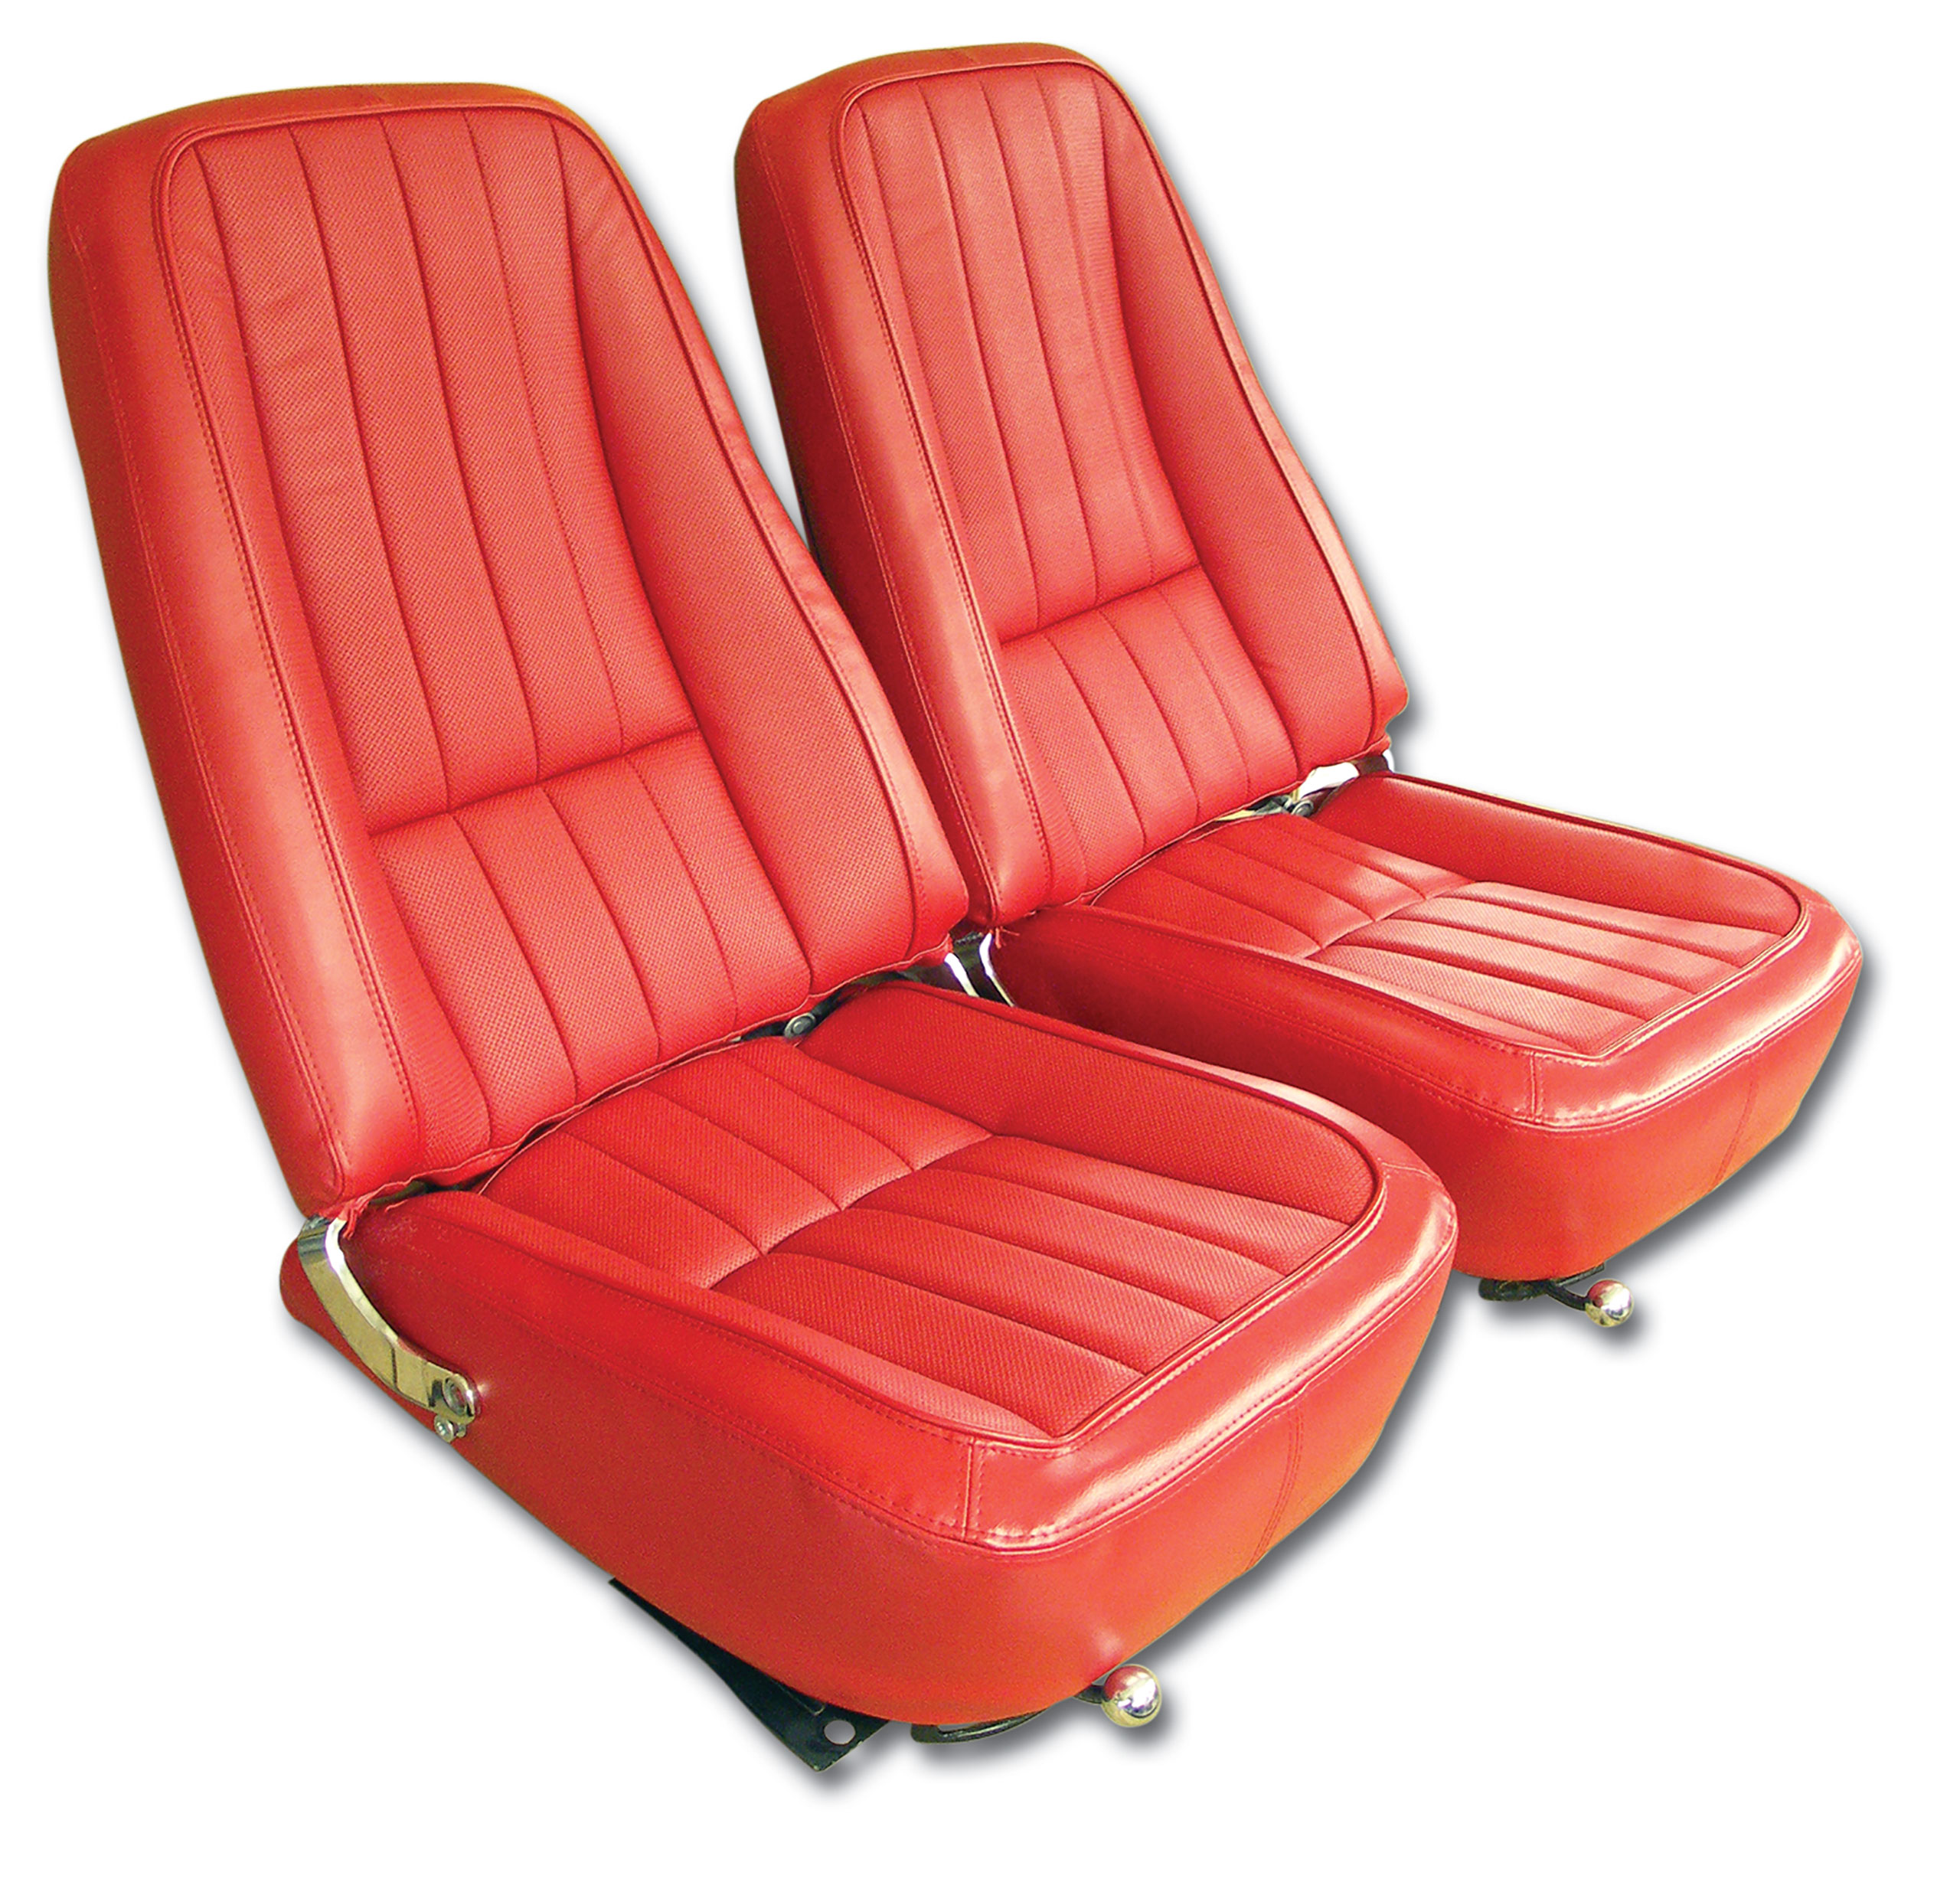 1968 Corvette C3 "Leather-Like" Vinyl Seat Covers- Red CA-421030 